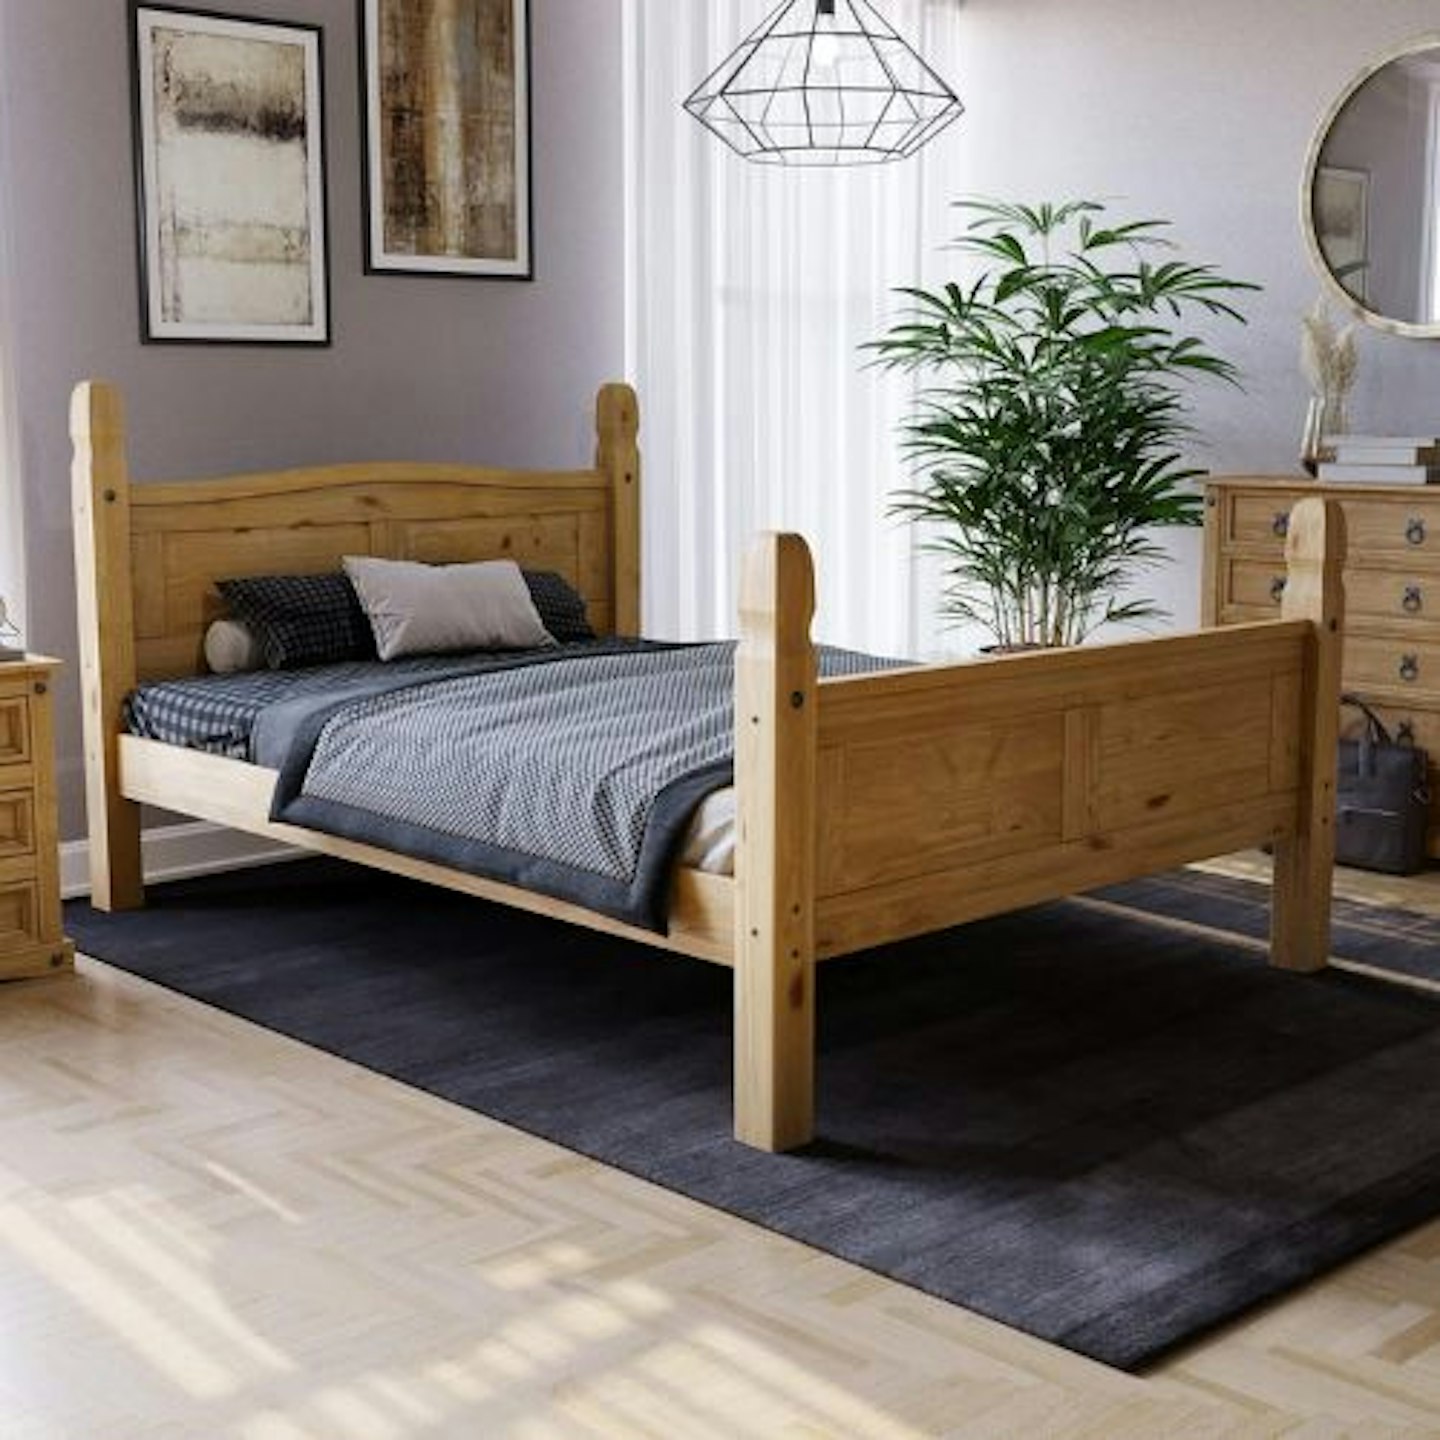 Corona Double Pine Bed Frame